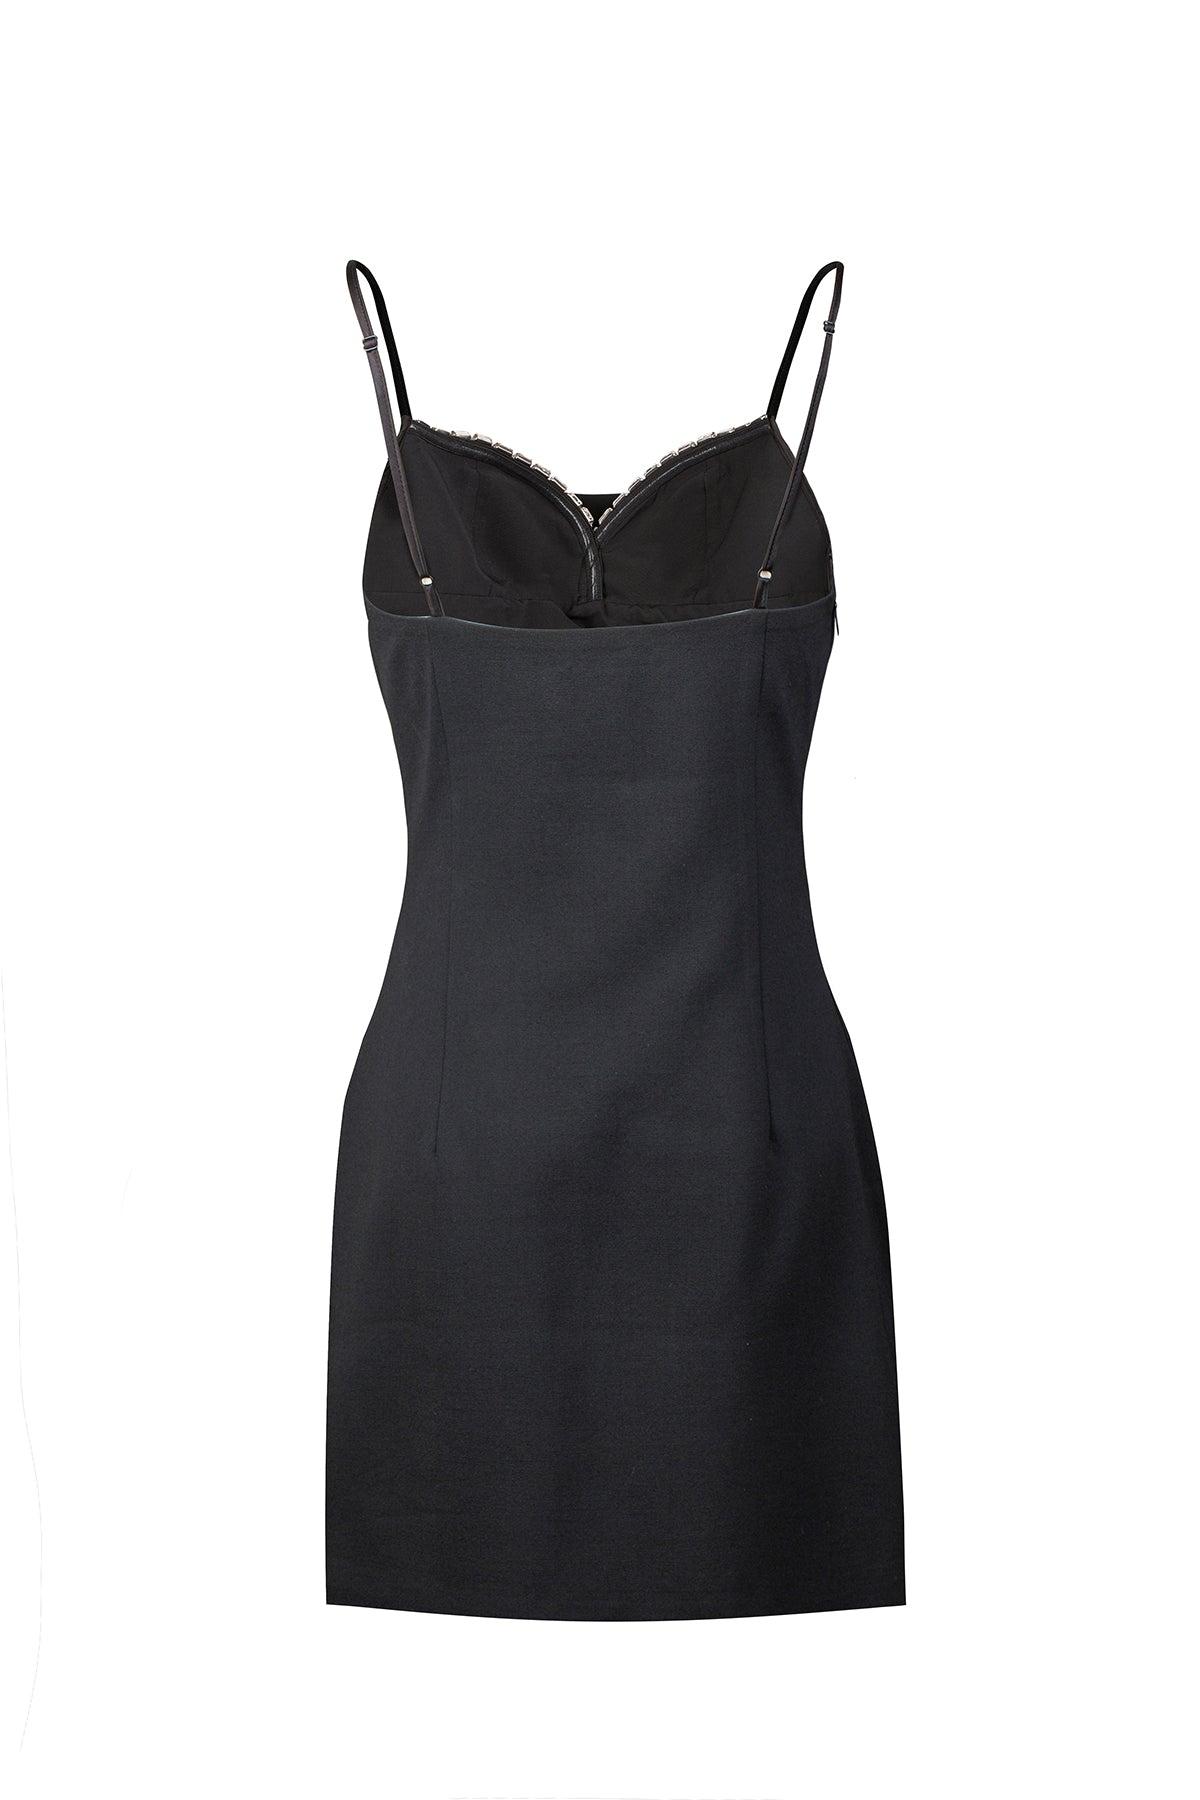 Elsie Dress (Black)